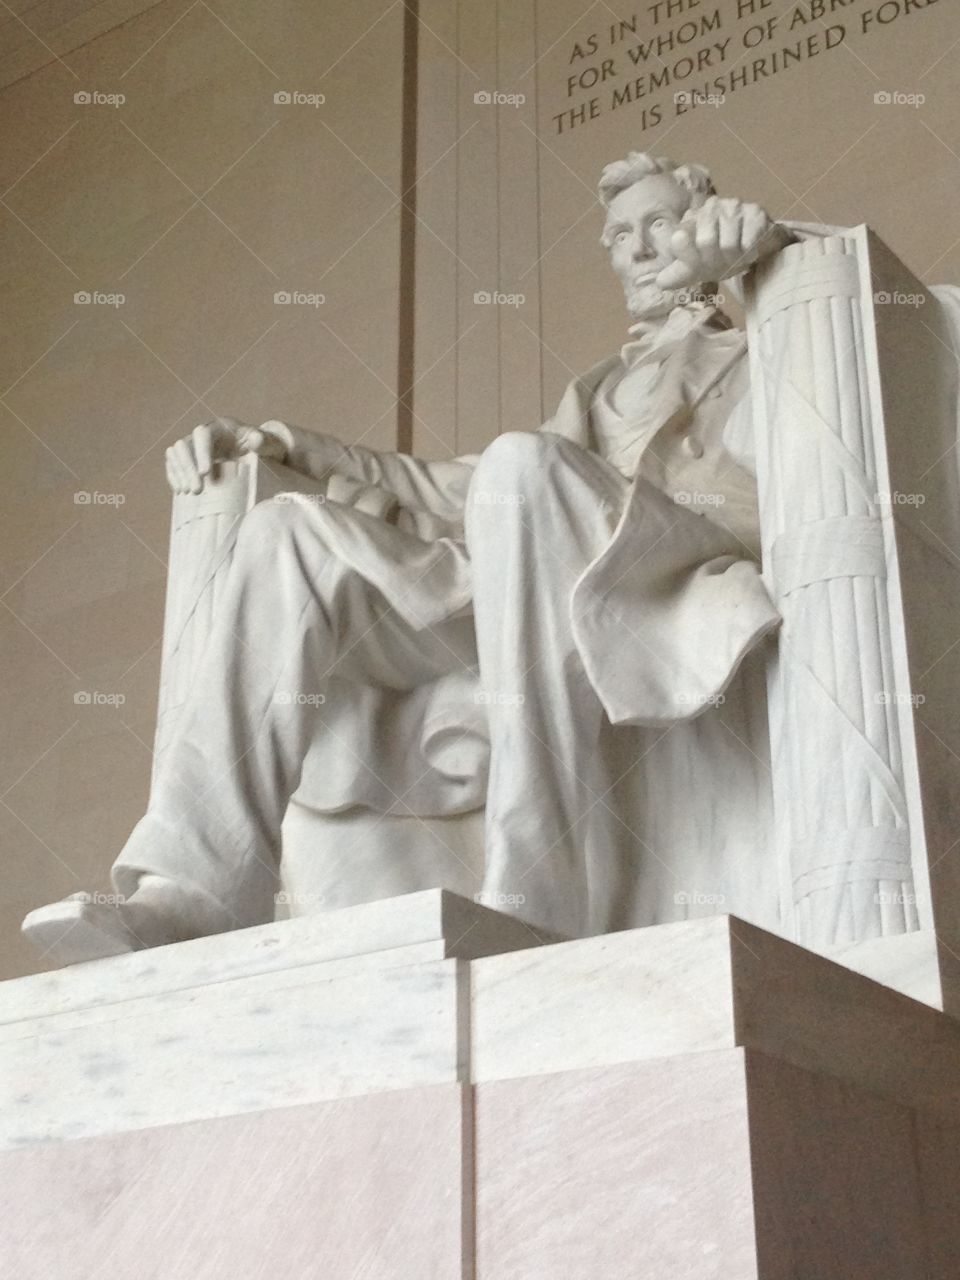 Lincoln memorial